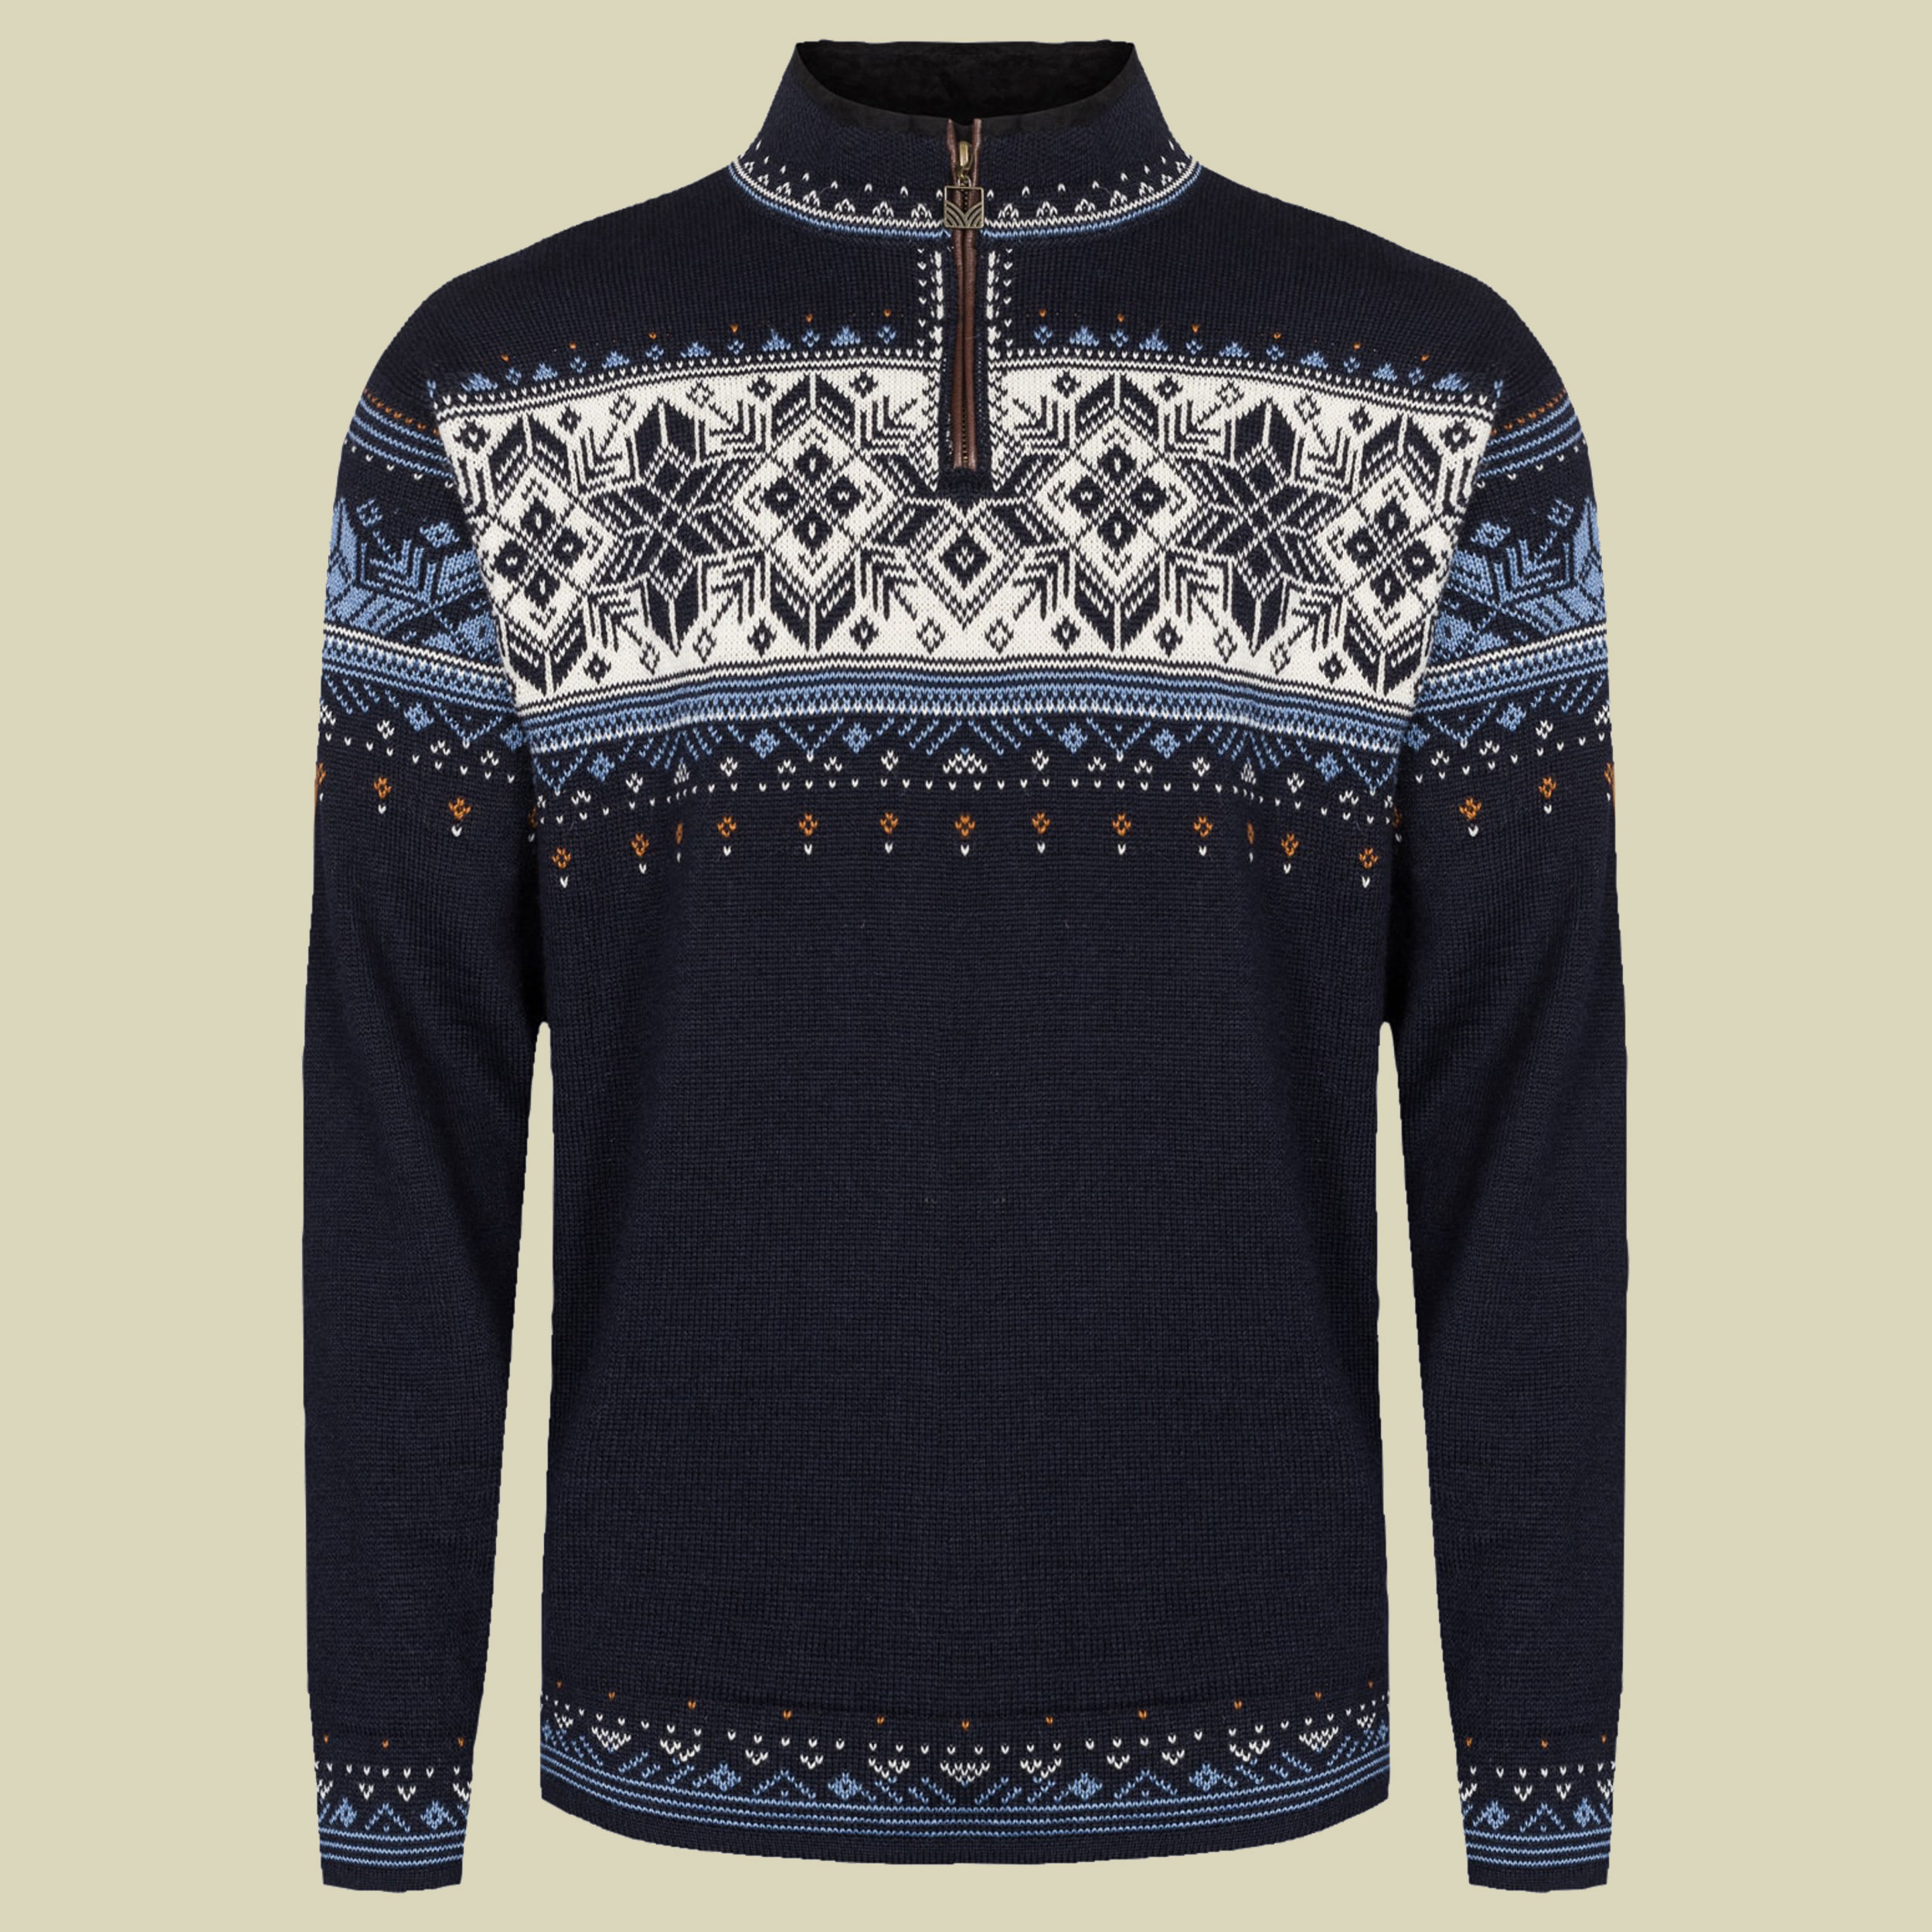 Blyfjell Unisex Sweater Größe XXL Farbe navy-blue shadow-off white